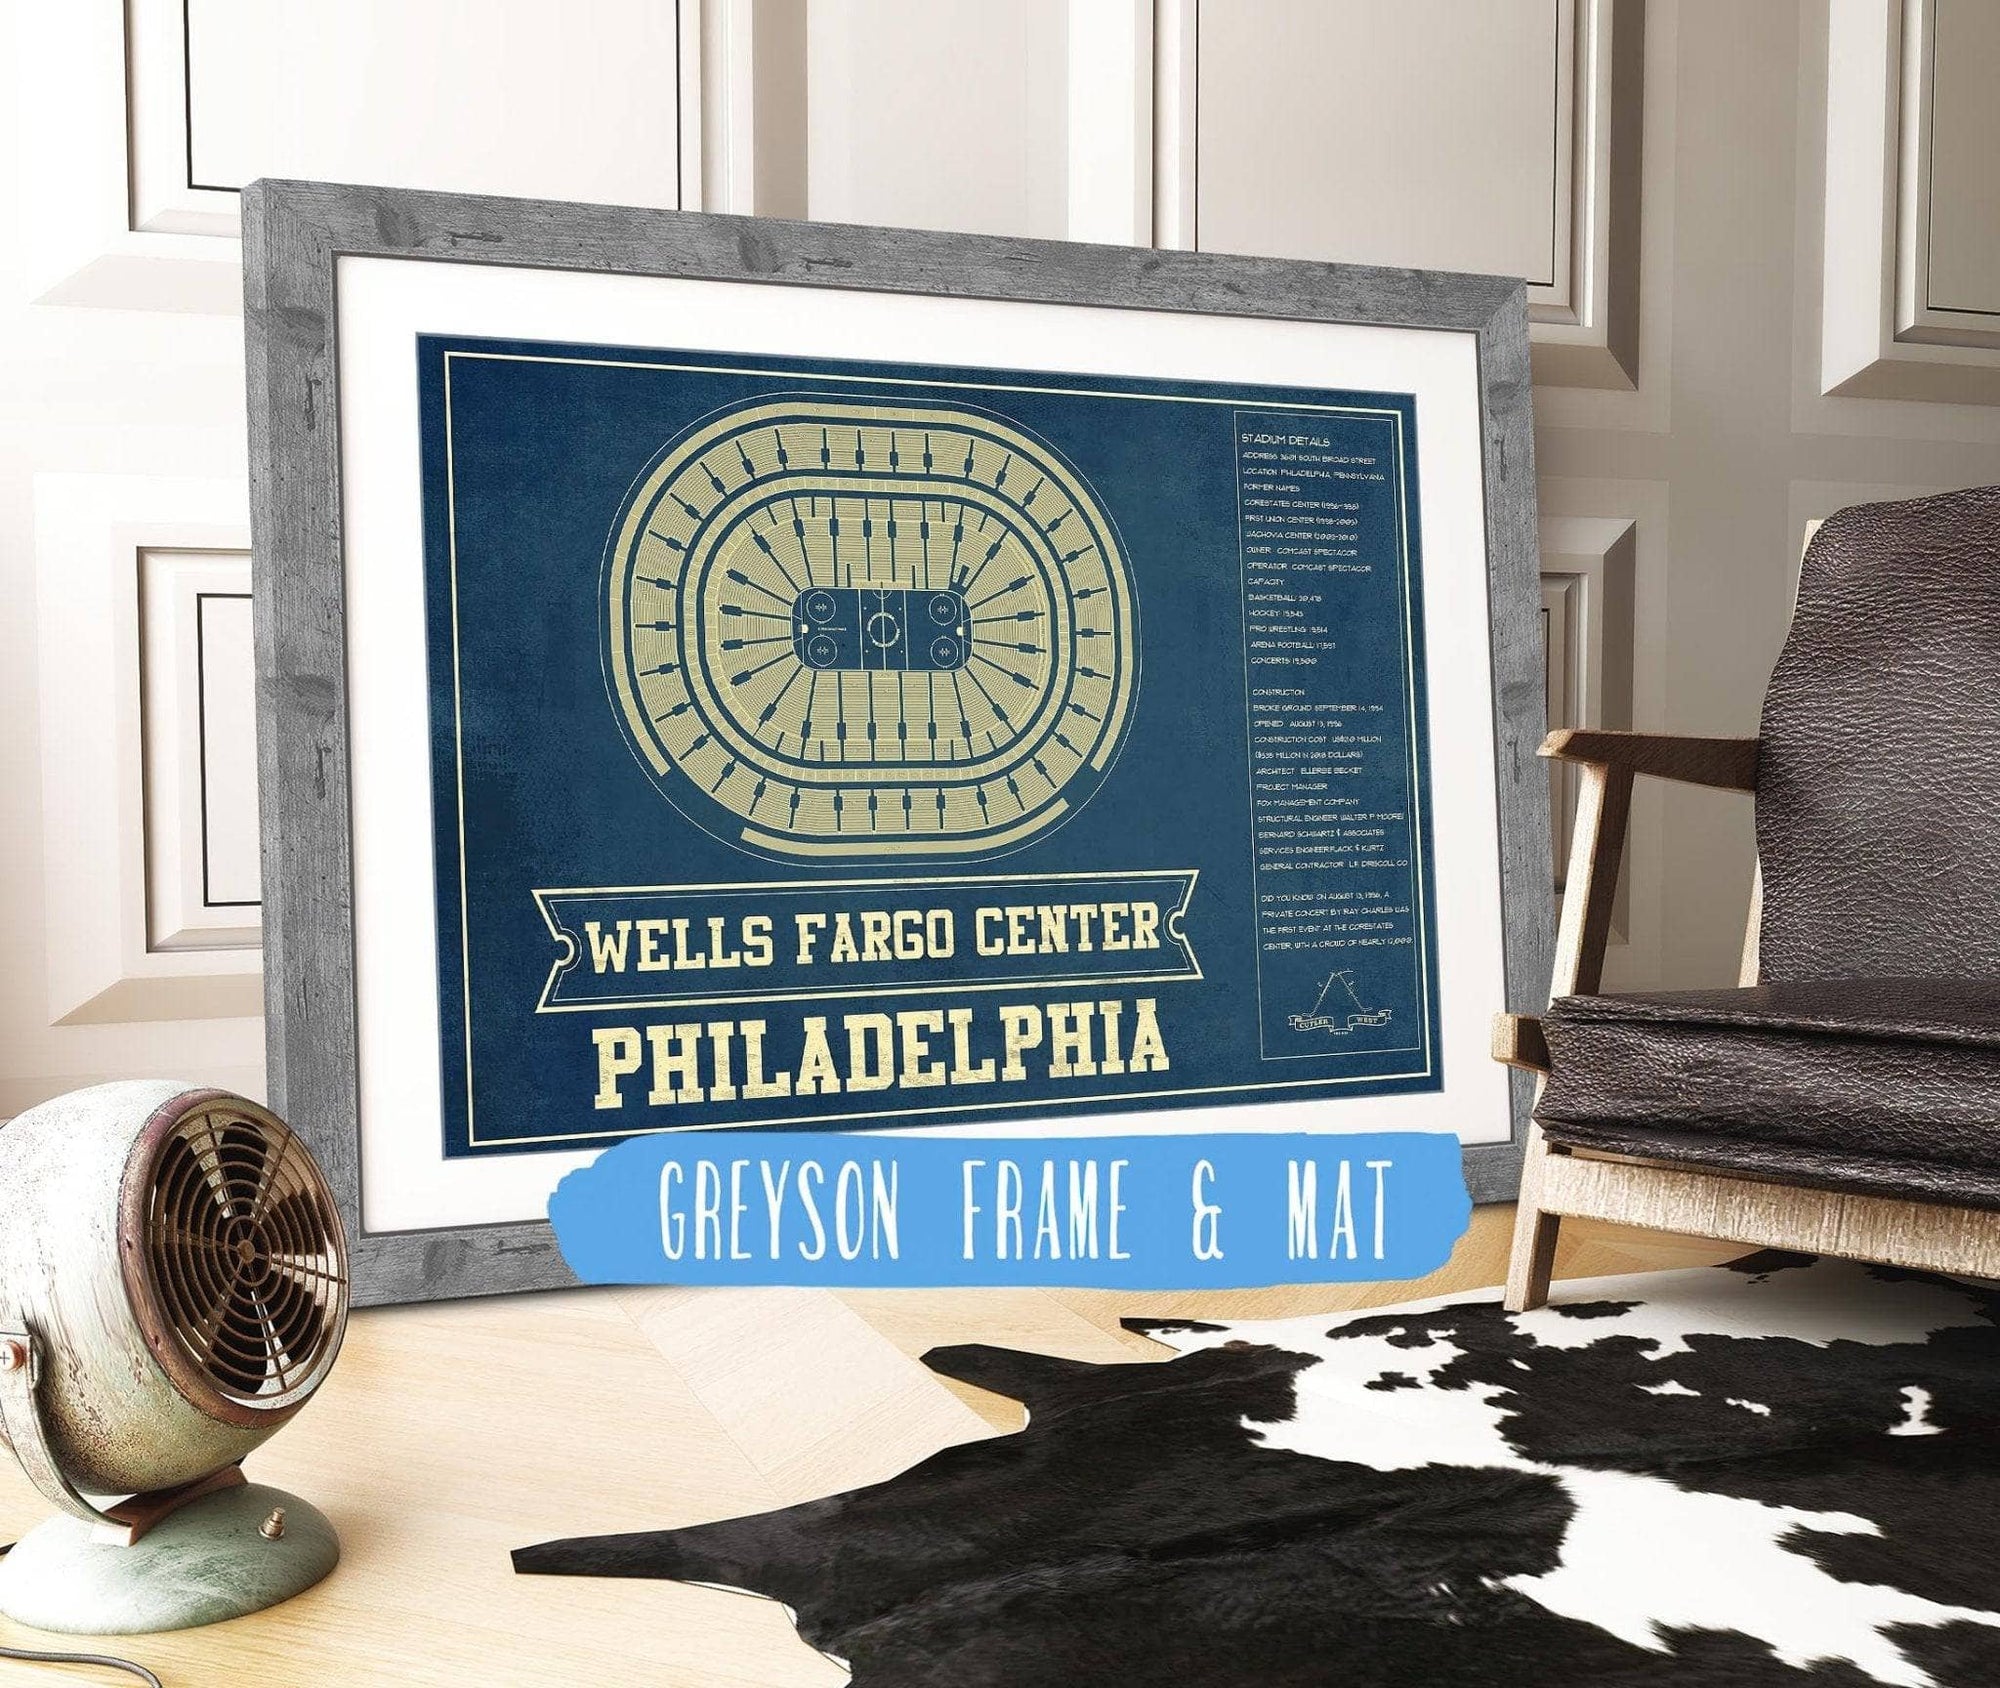 Cutler West 14" x 11" / Greyson Frame & Mat Philadelphia Flyers Wells Fargo Center Philadelphia Seating Chart - Vintage Hockey Team Color Print 673824383_80728